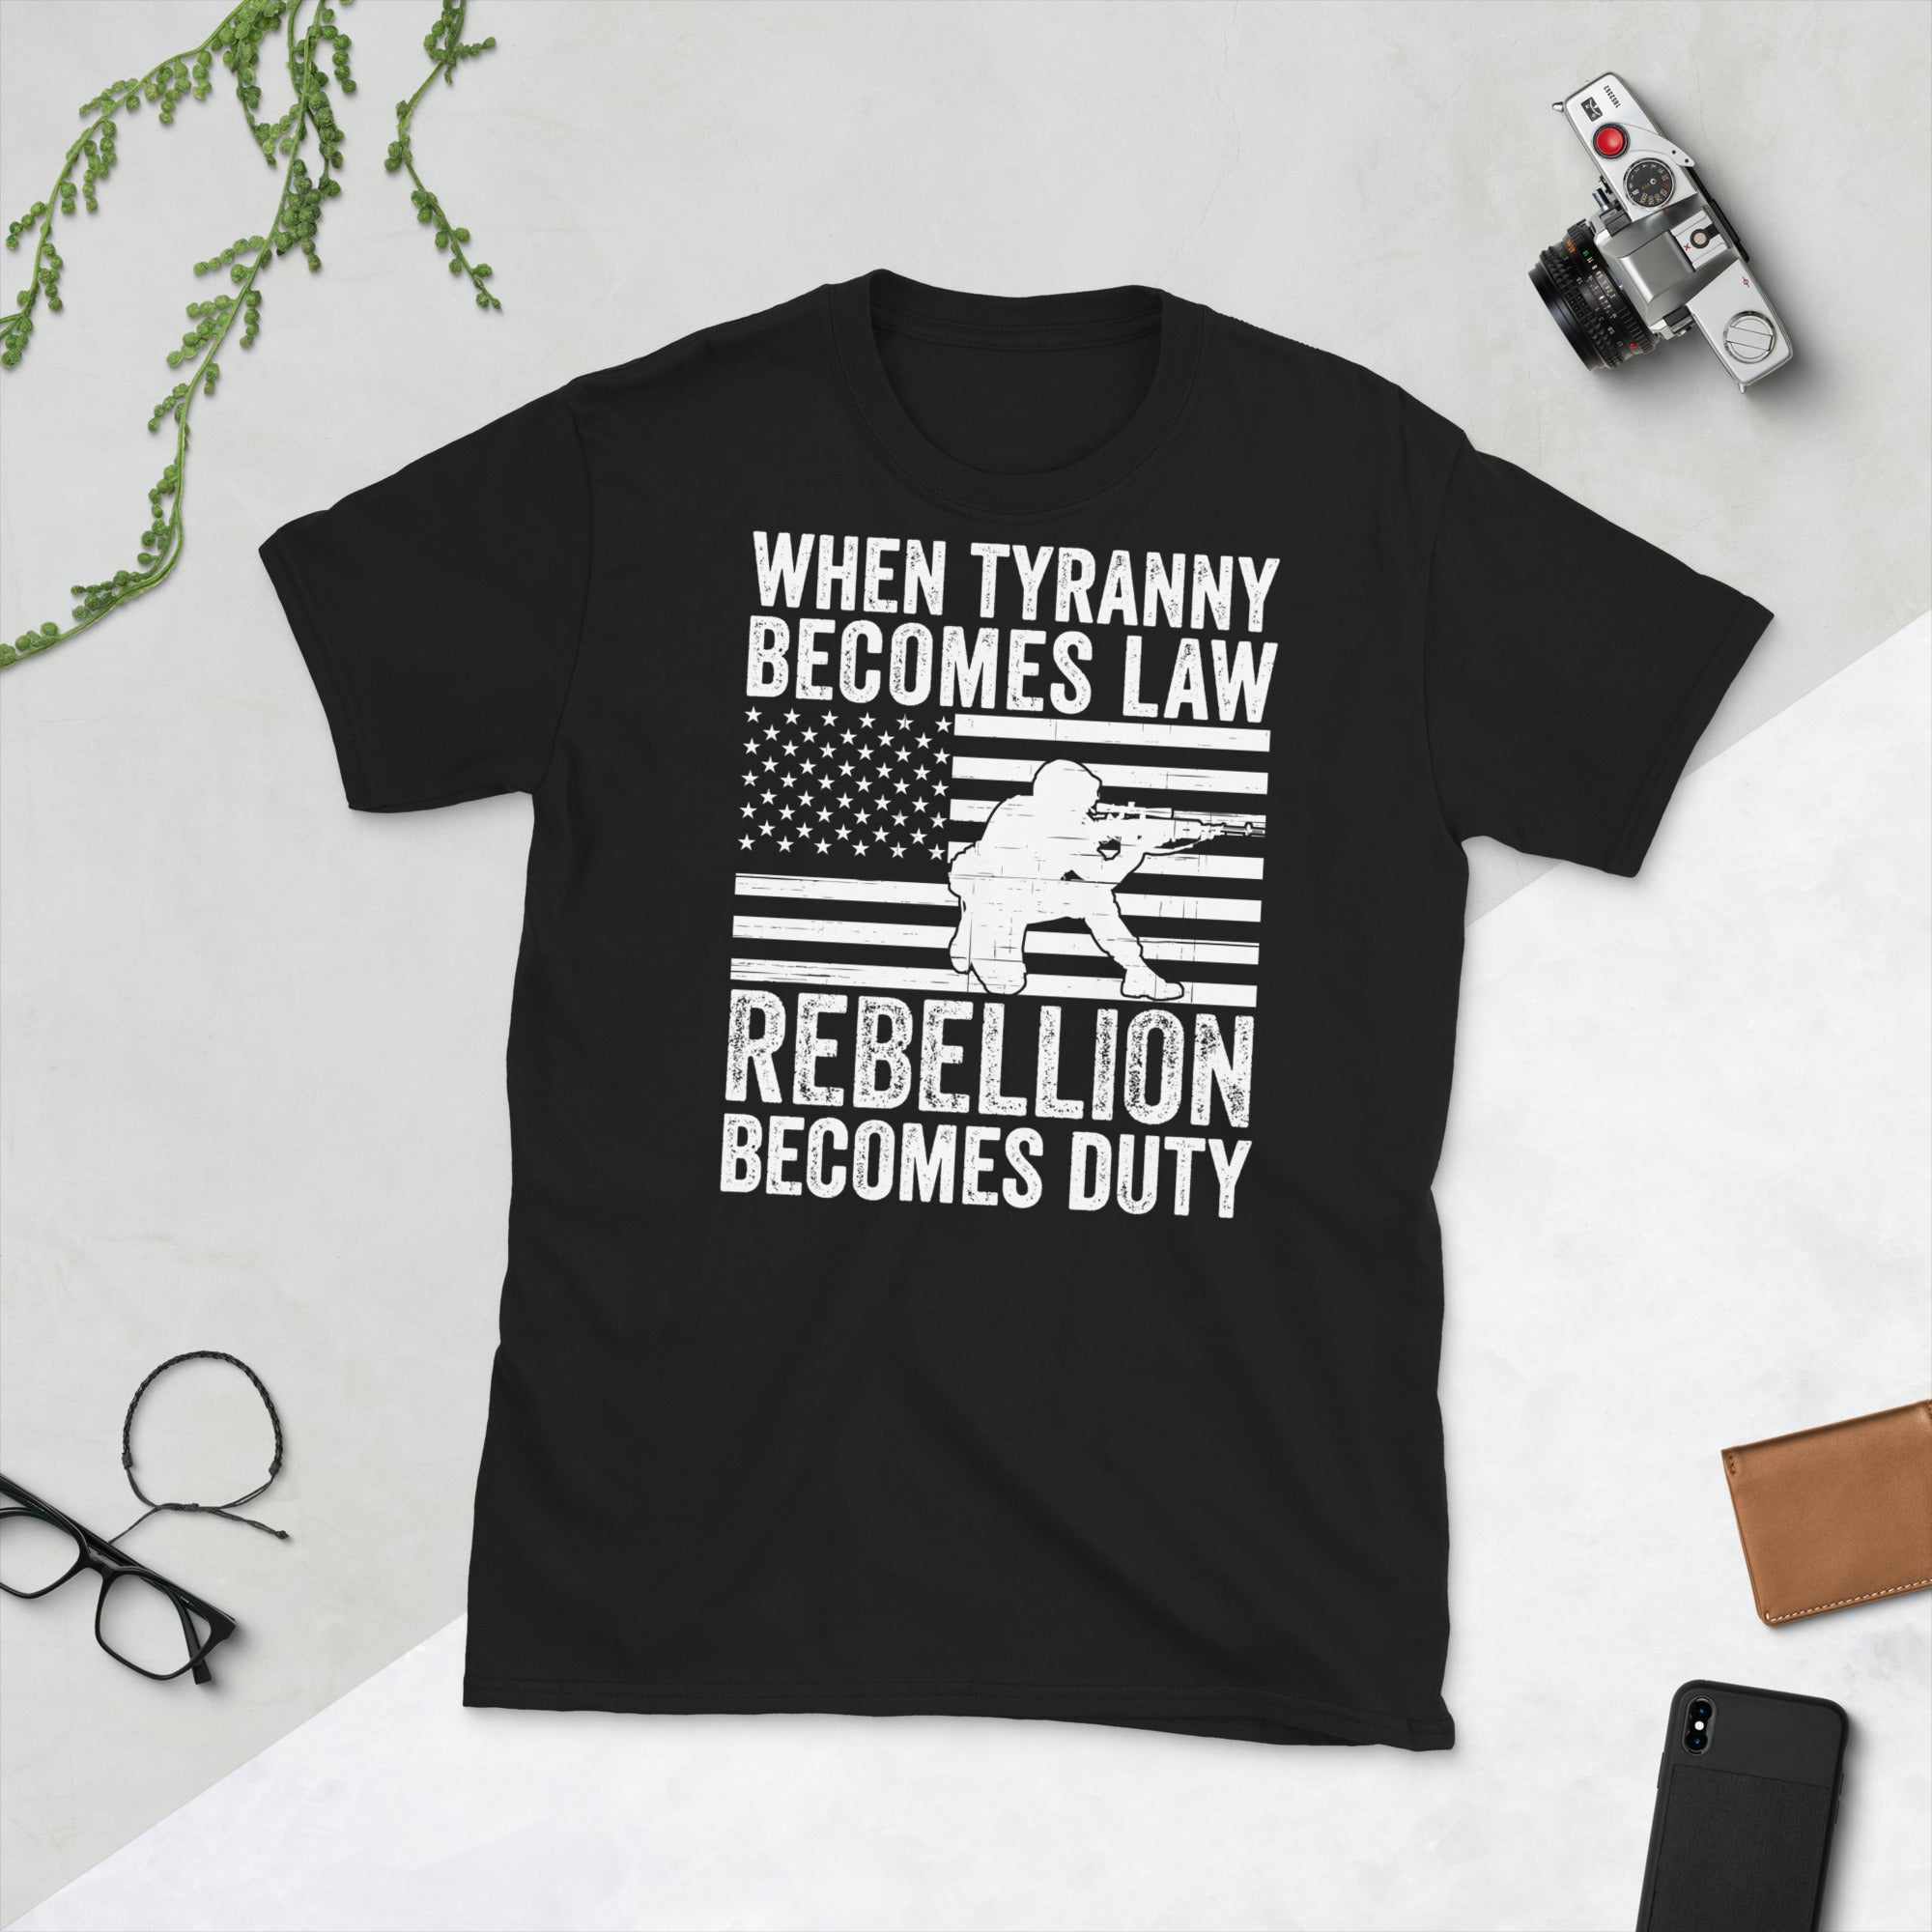 Tyranny Shirt, Rebellion Shirt, When Tyranny Becomes Law, Rebellion Becomes Duty, 1776 Shirt, Thomas Jefferson Shirt, Political Shirts - Madeinsea©